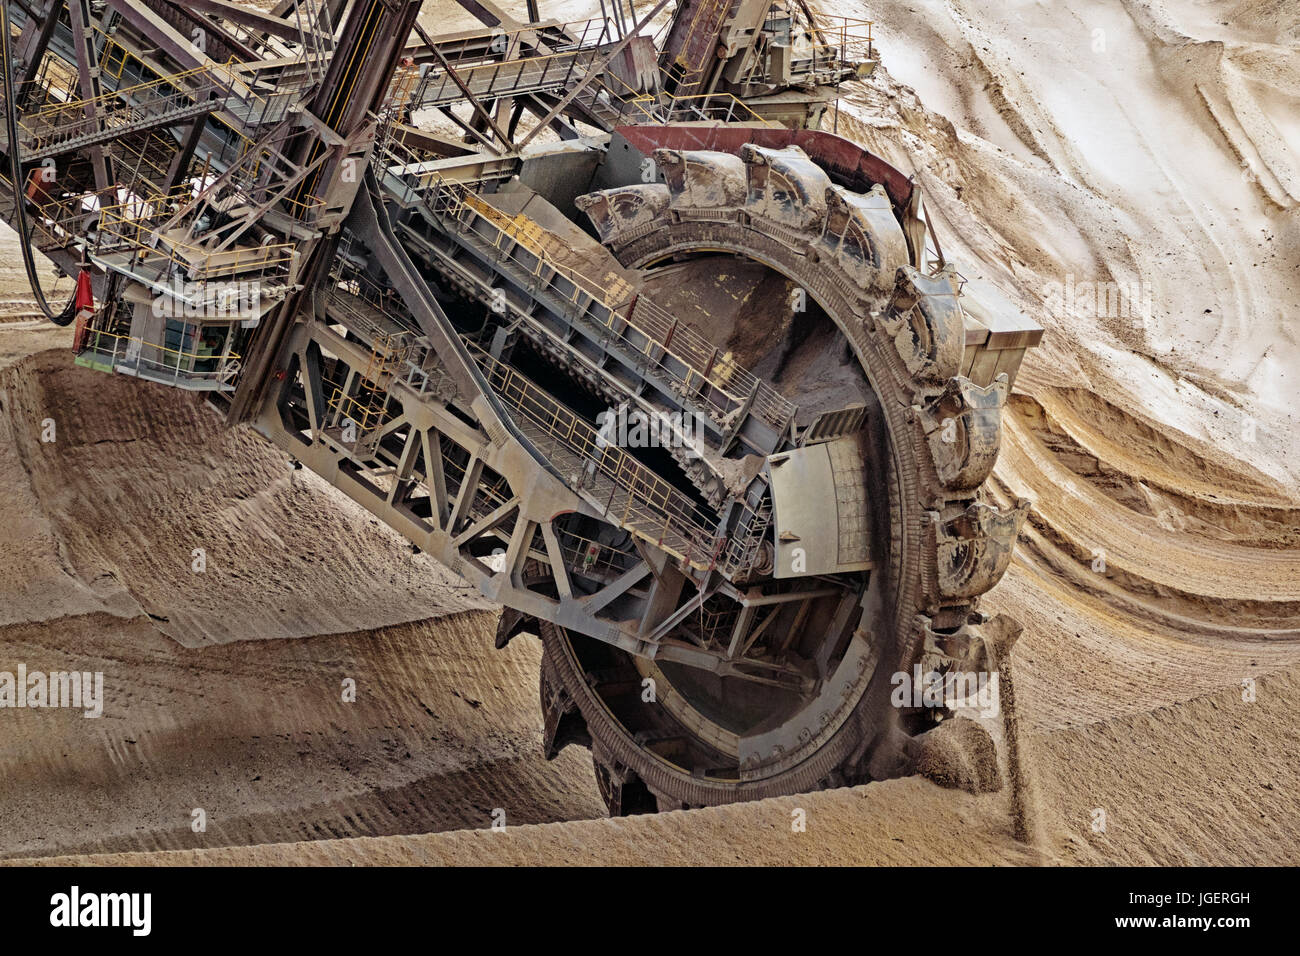 Bucket-wheel excavator mining in a brown coal open pit mine. Stock Photo